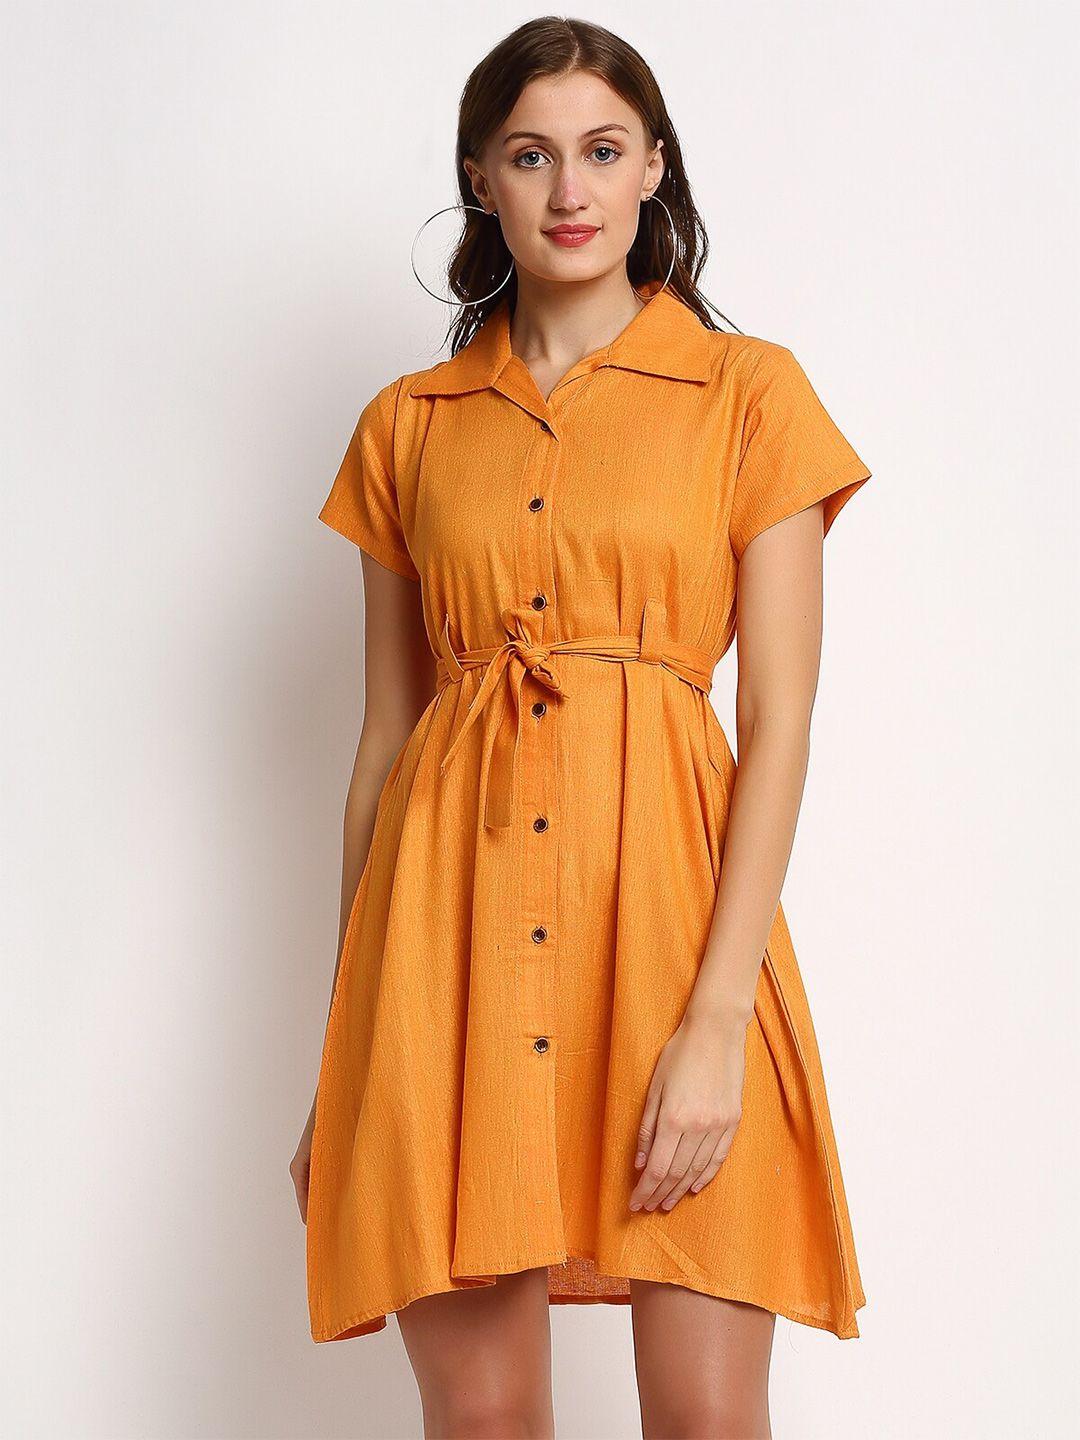 enchanted drapes orange shirt dress